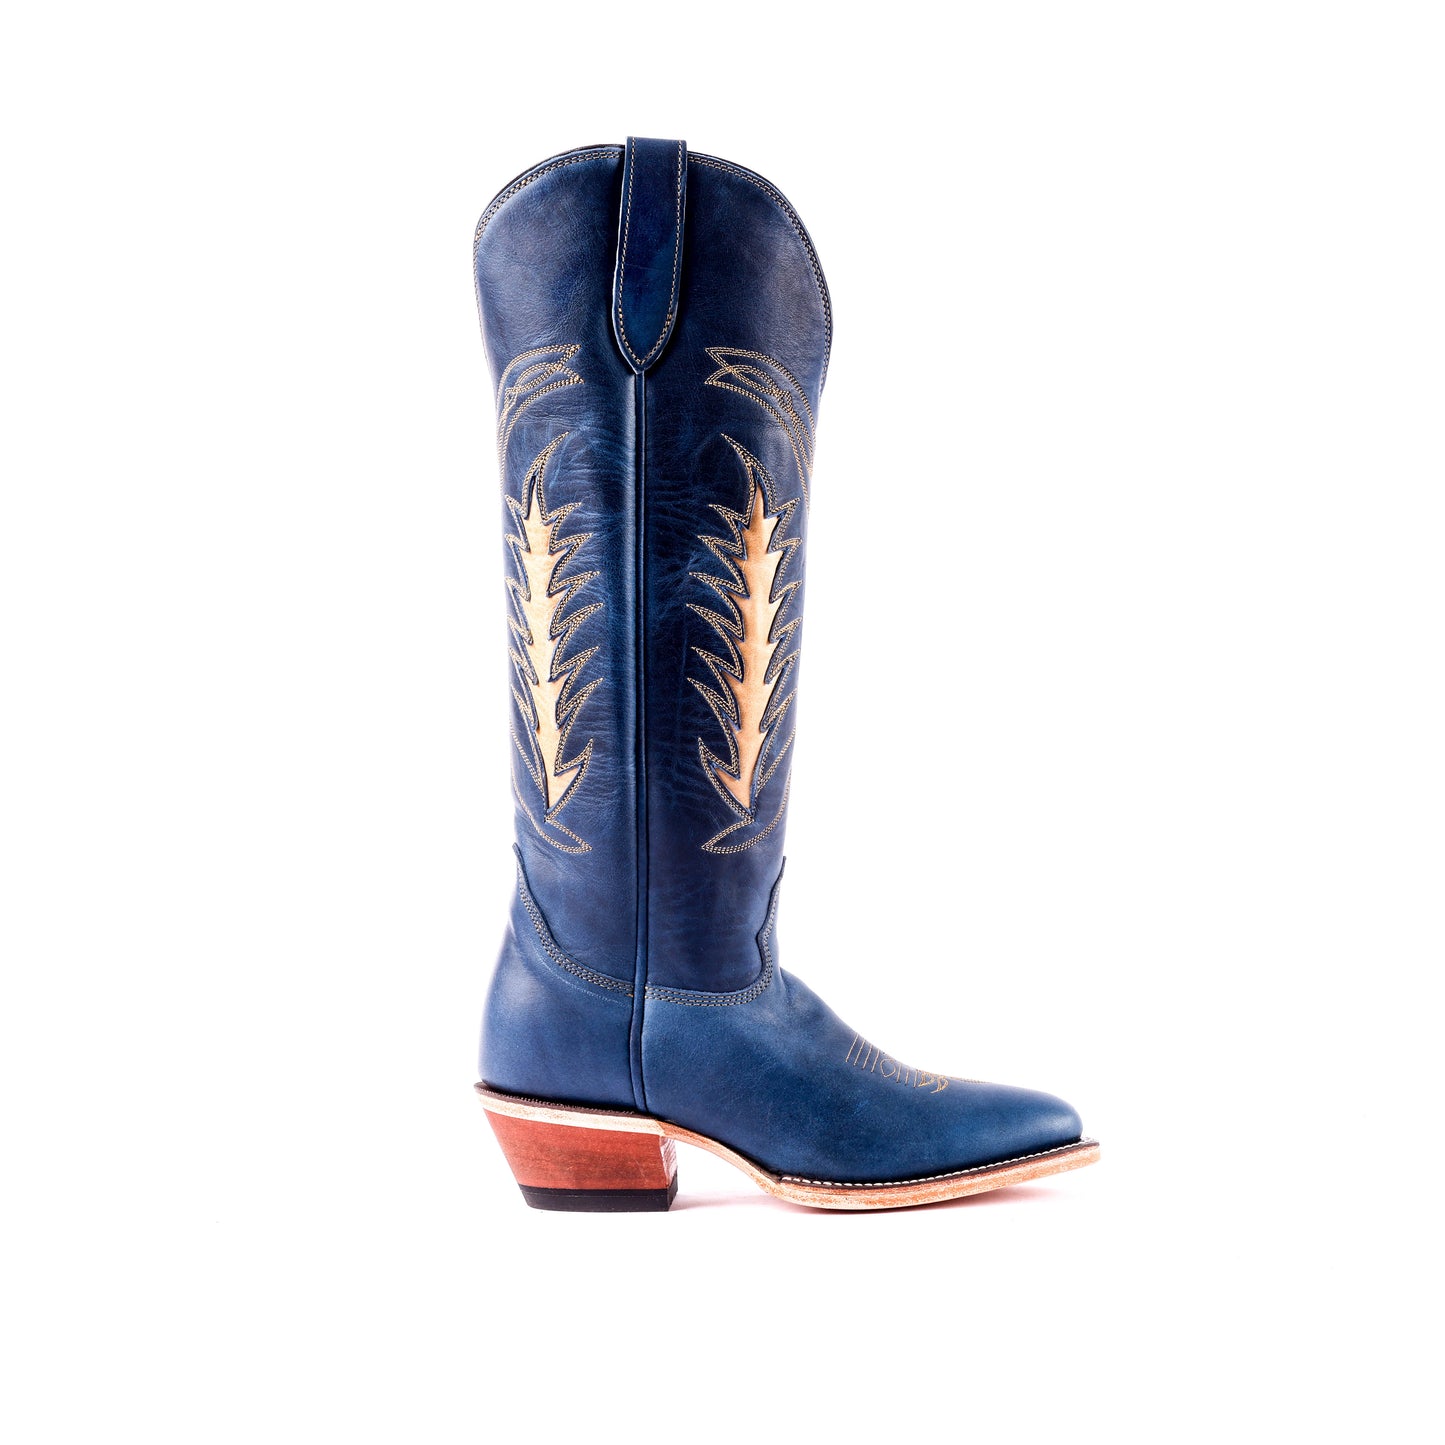 The Kimberley Boot - Women's western boot